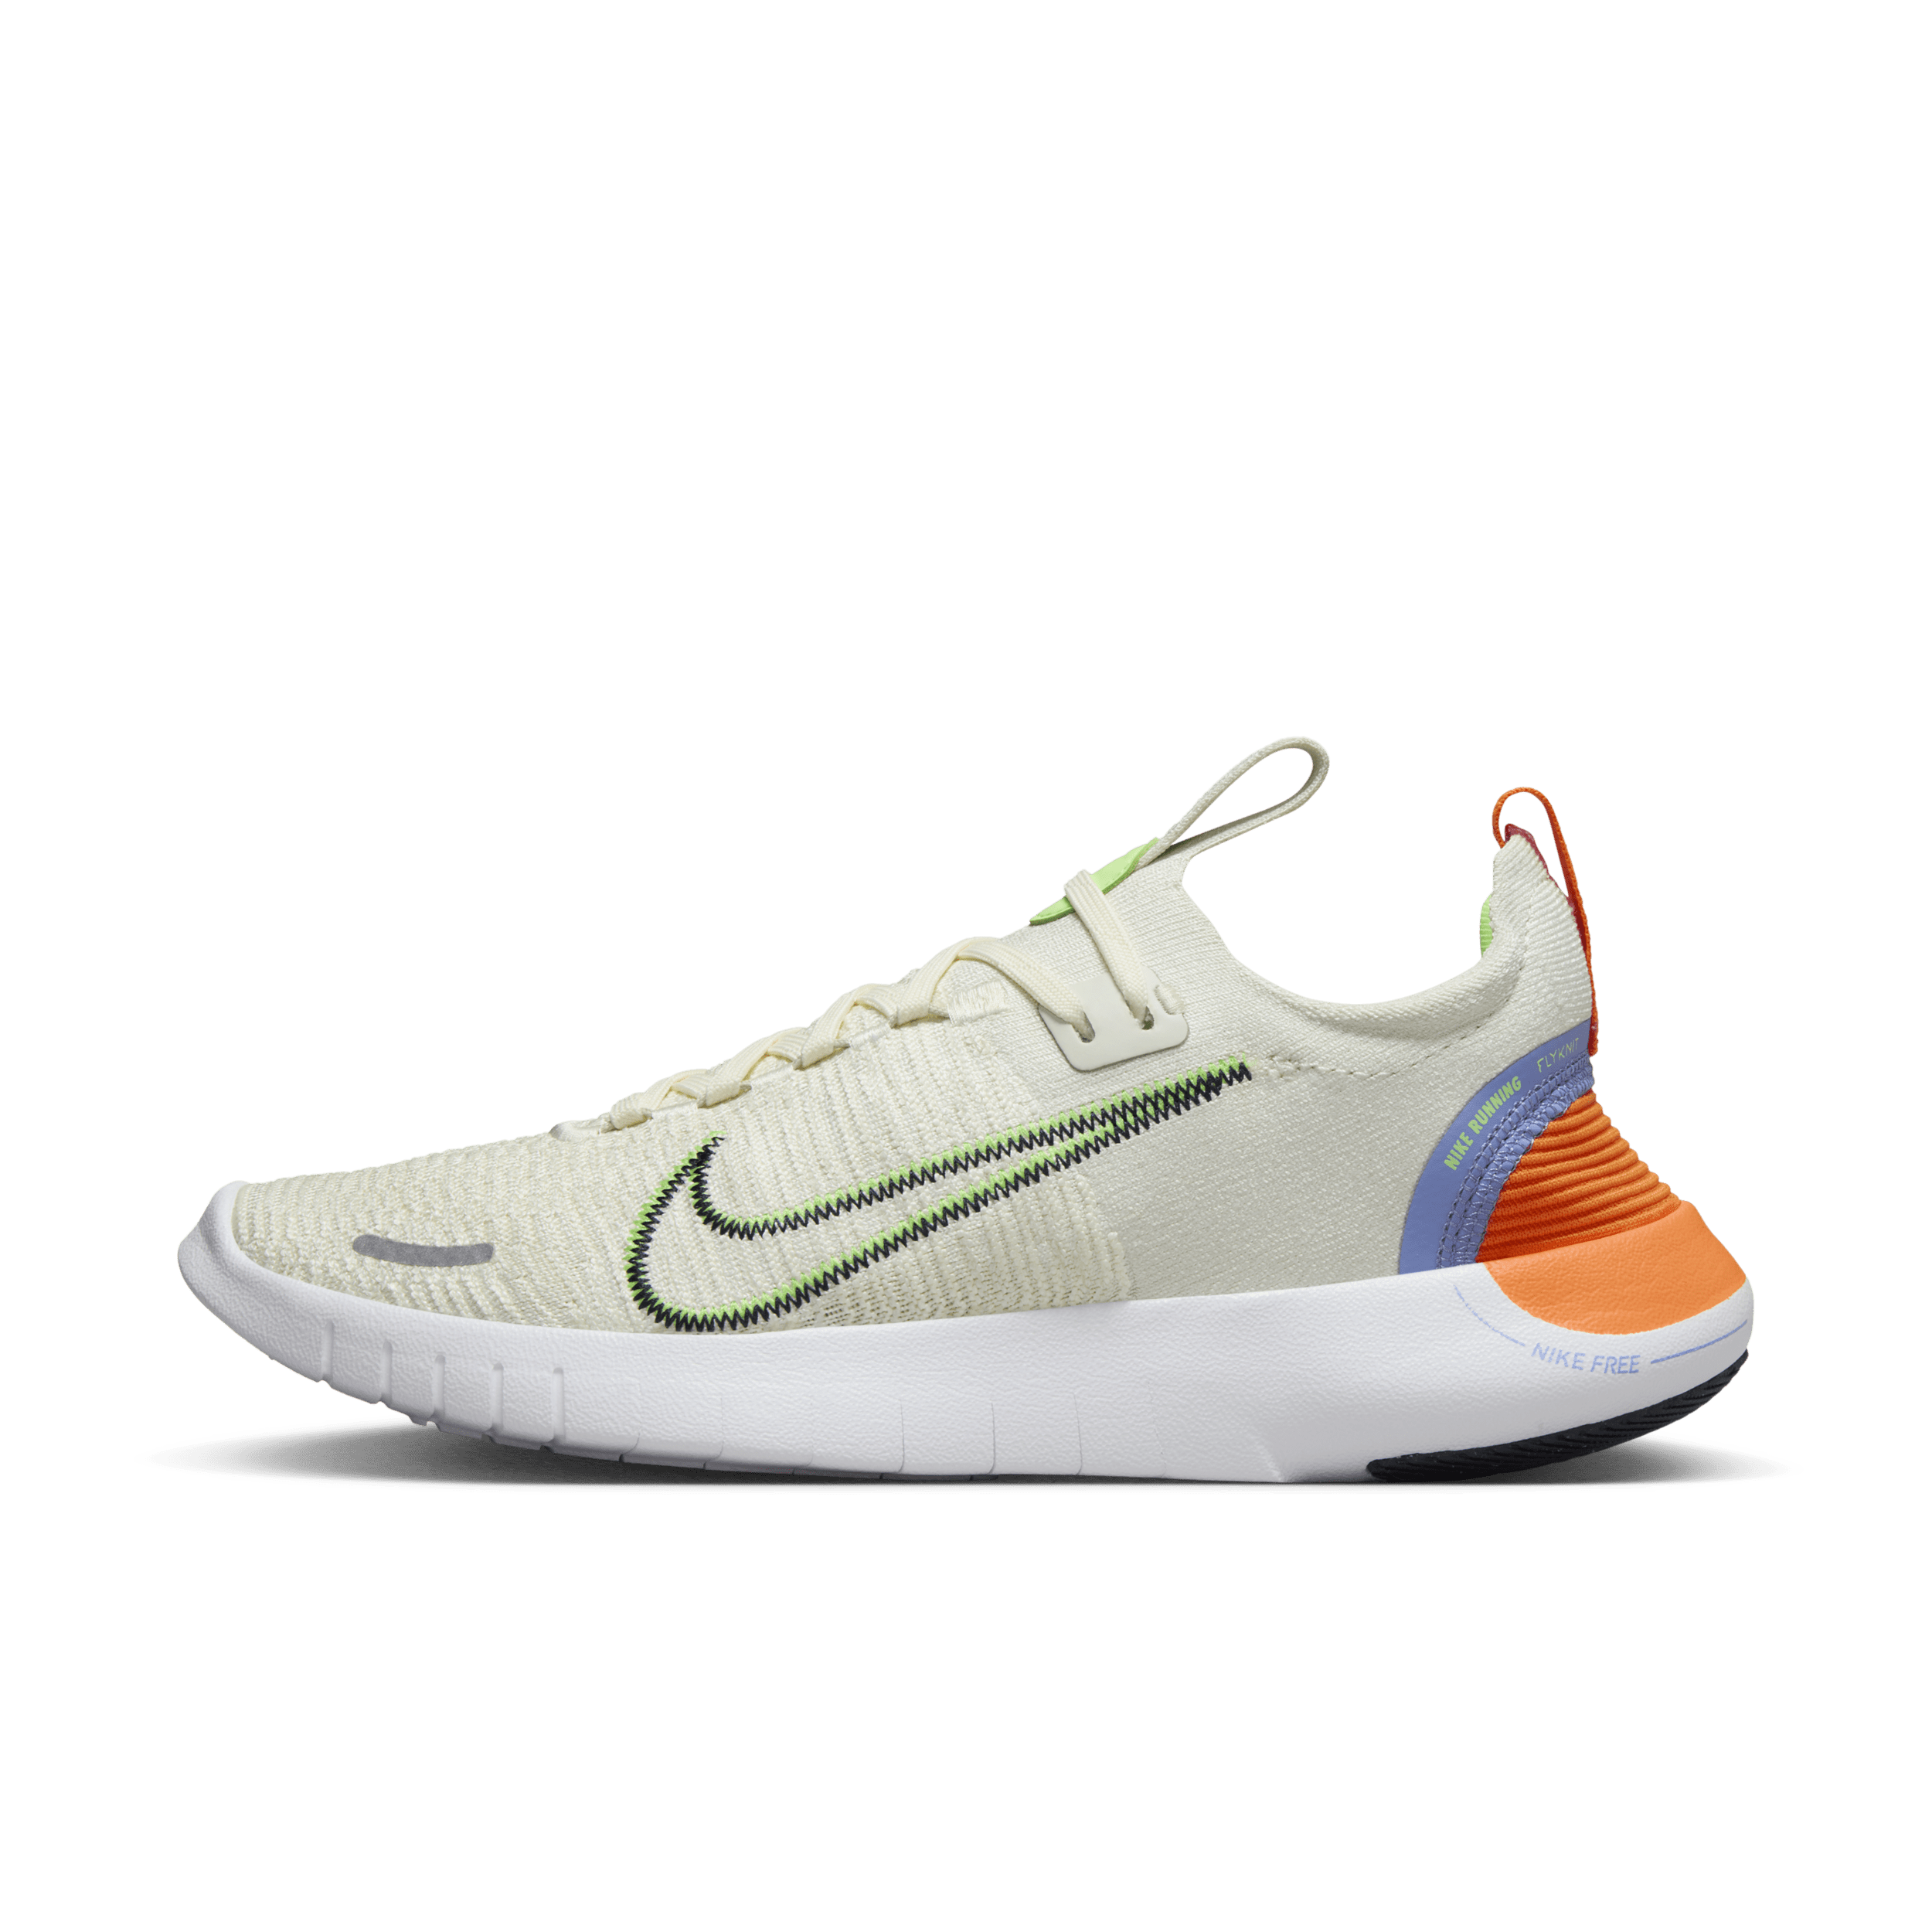 Nike Free RN NN hardloopschoenen voor dames (straat) - Groen